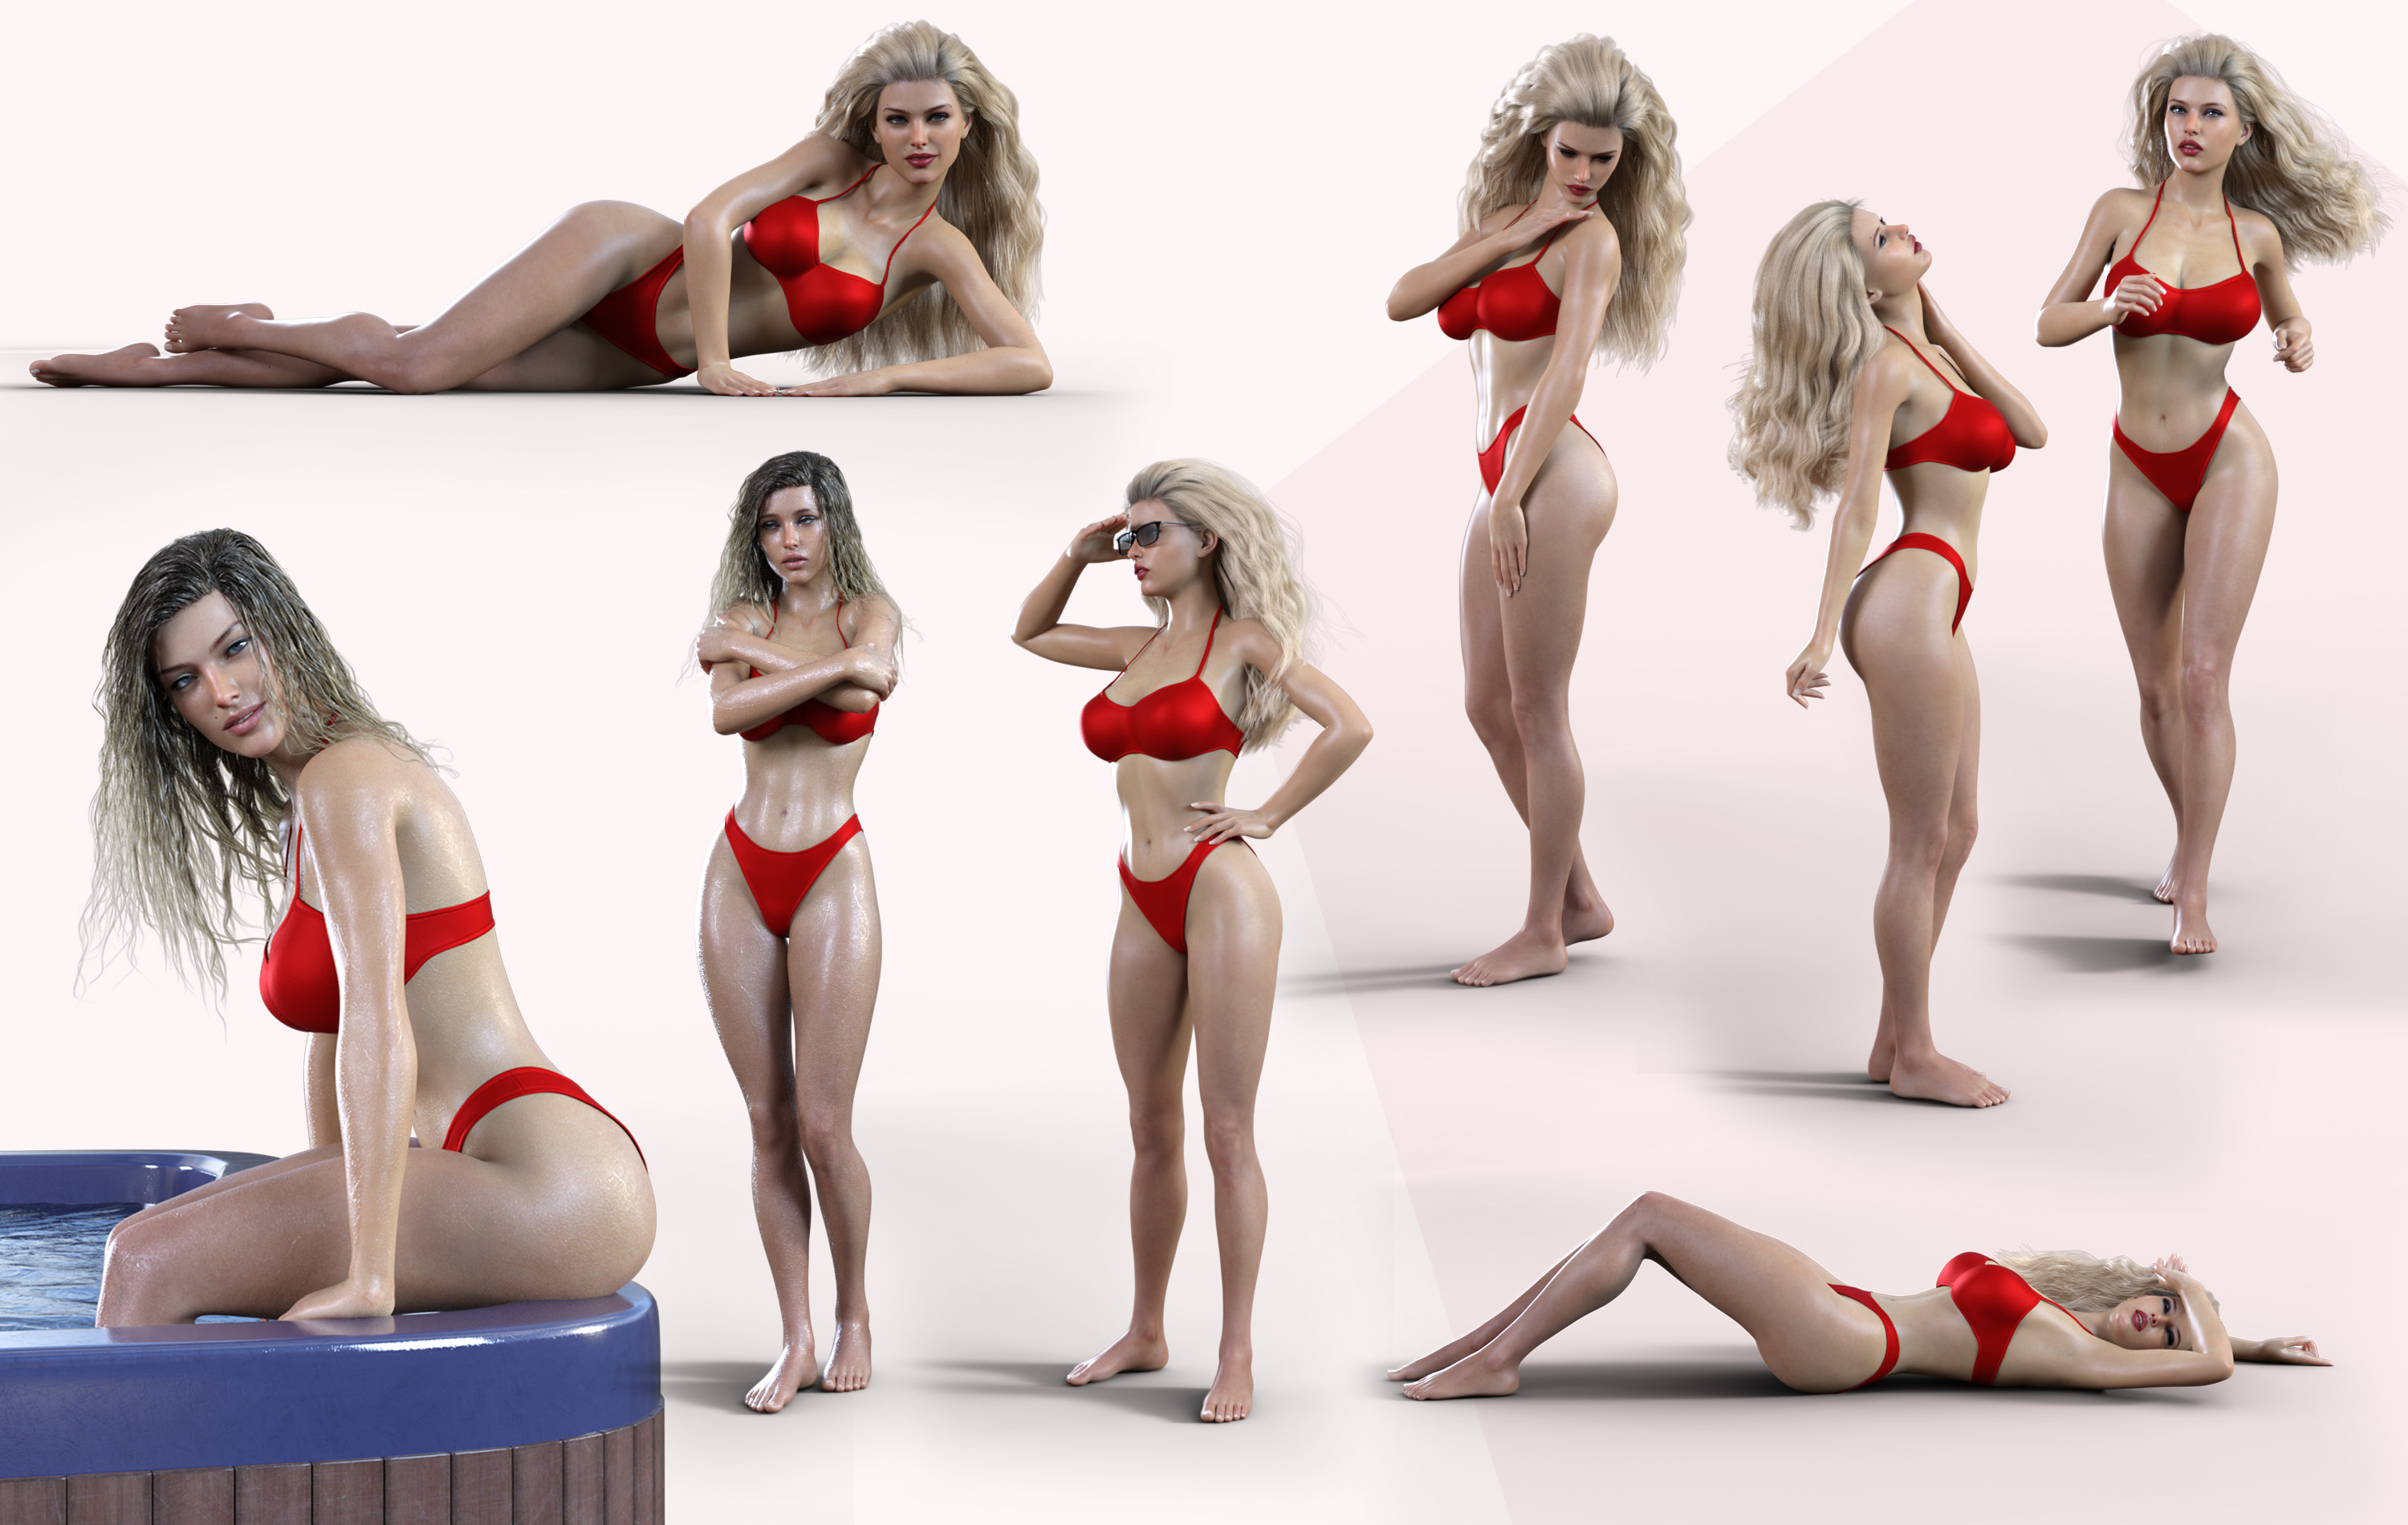 Z Summer Beauty Shape and Pose Mega Set by: Zeddicuss, 3D Models by Daz 3D